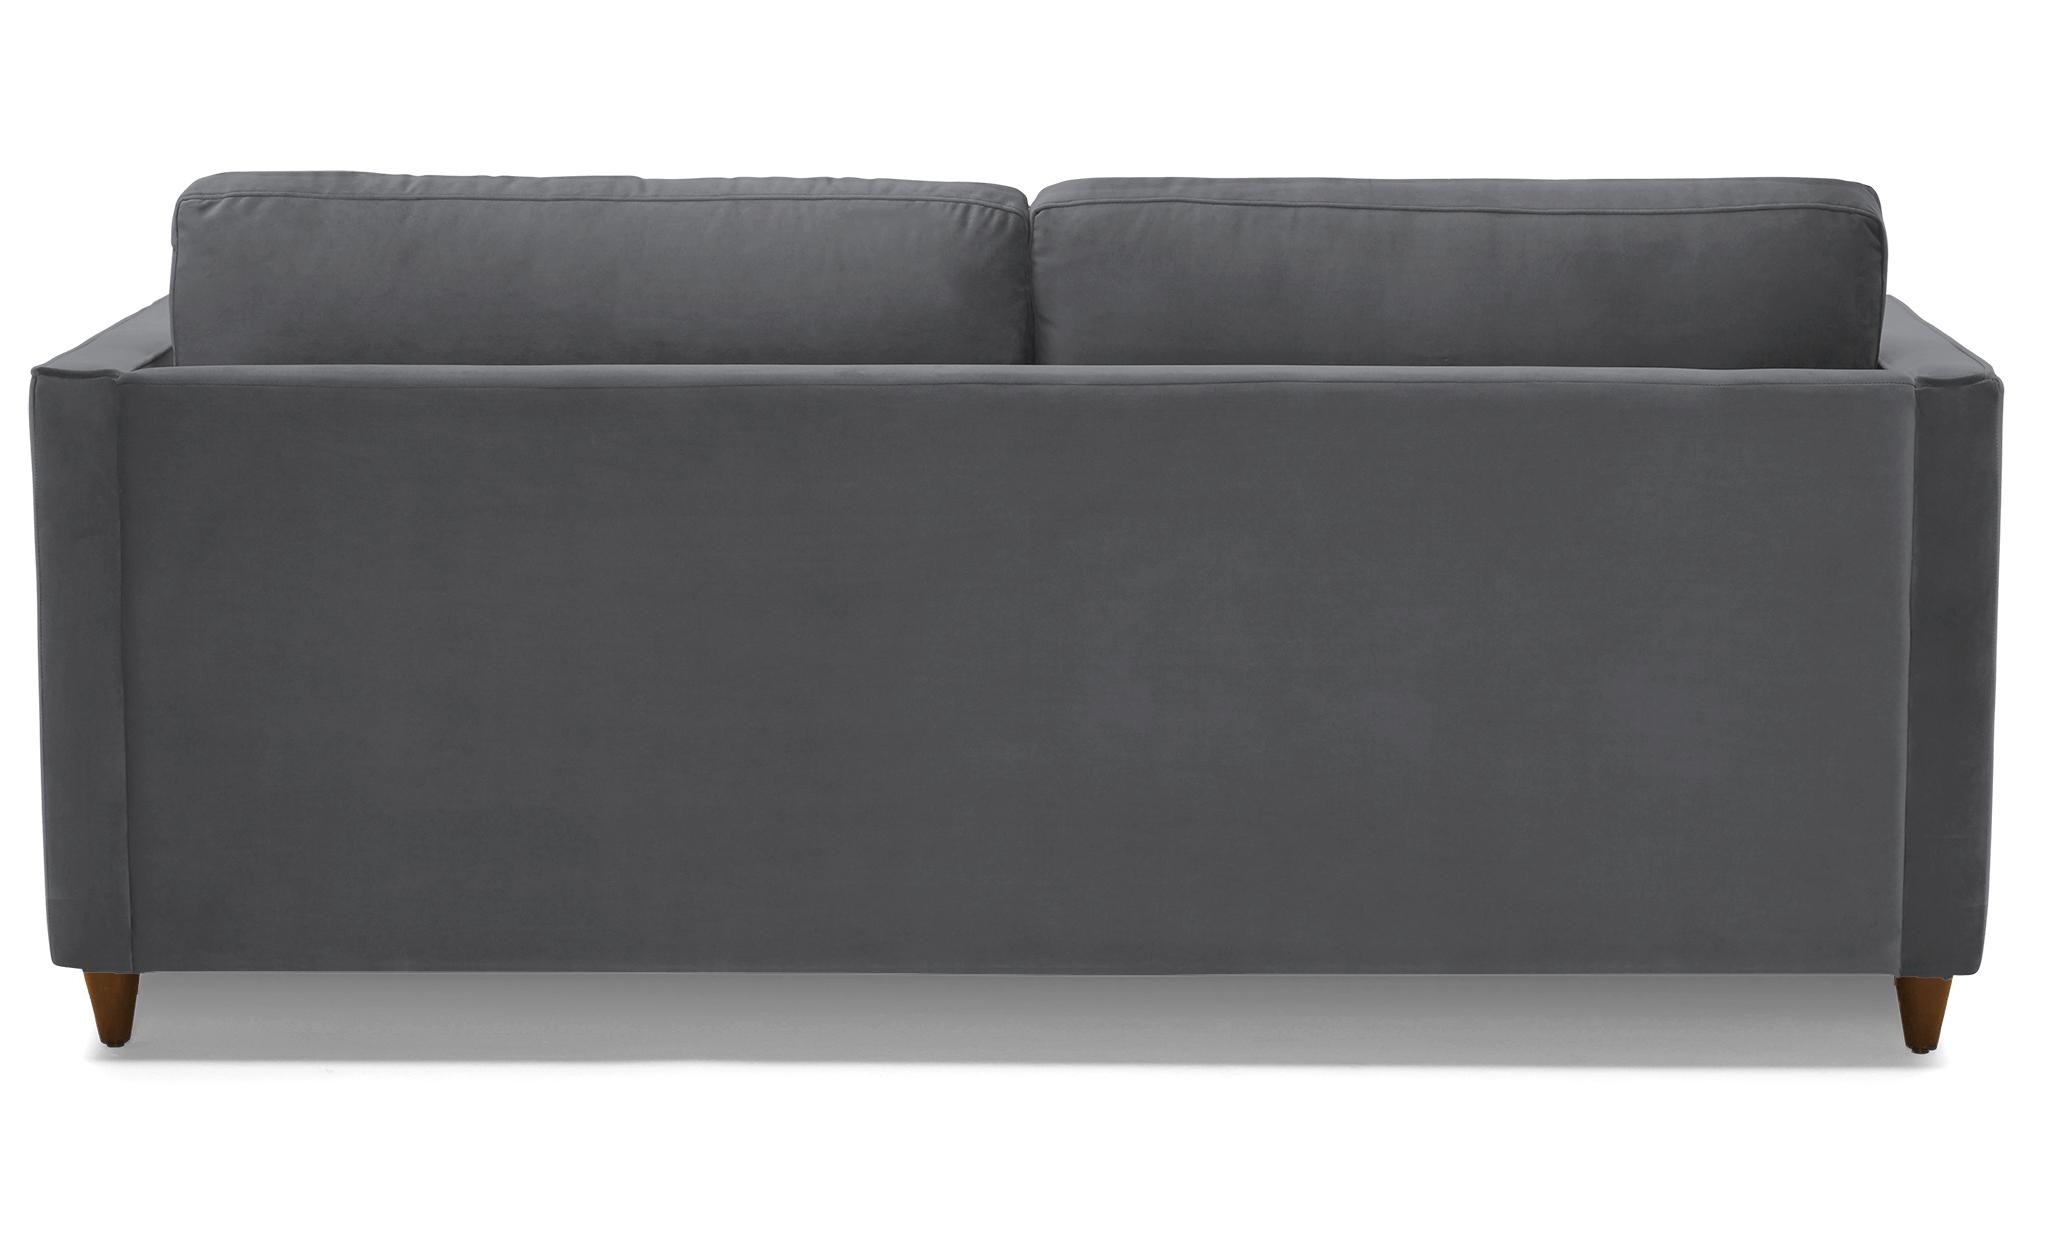 Gray Briar Mid Century Modern Sleeper Sofa - Essence Ash - Mocha - Image 4